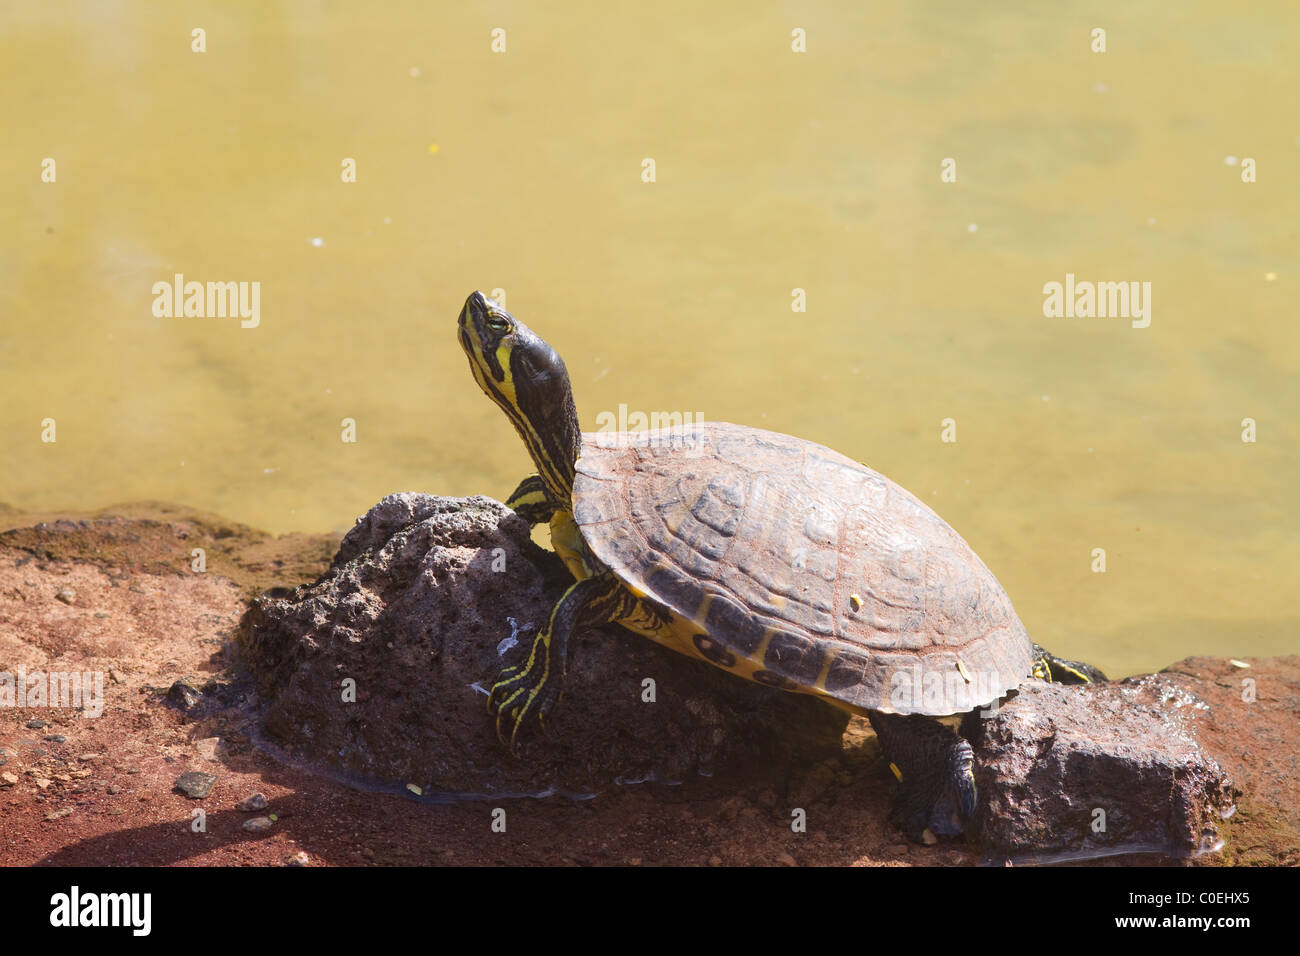 Terrapin Aquatic reptile resting on a rock Stock Photo